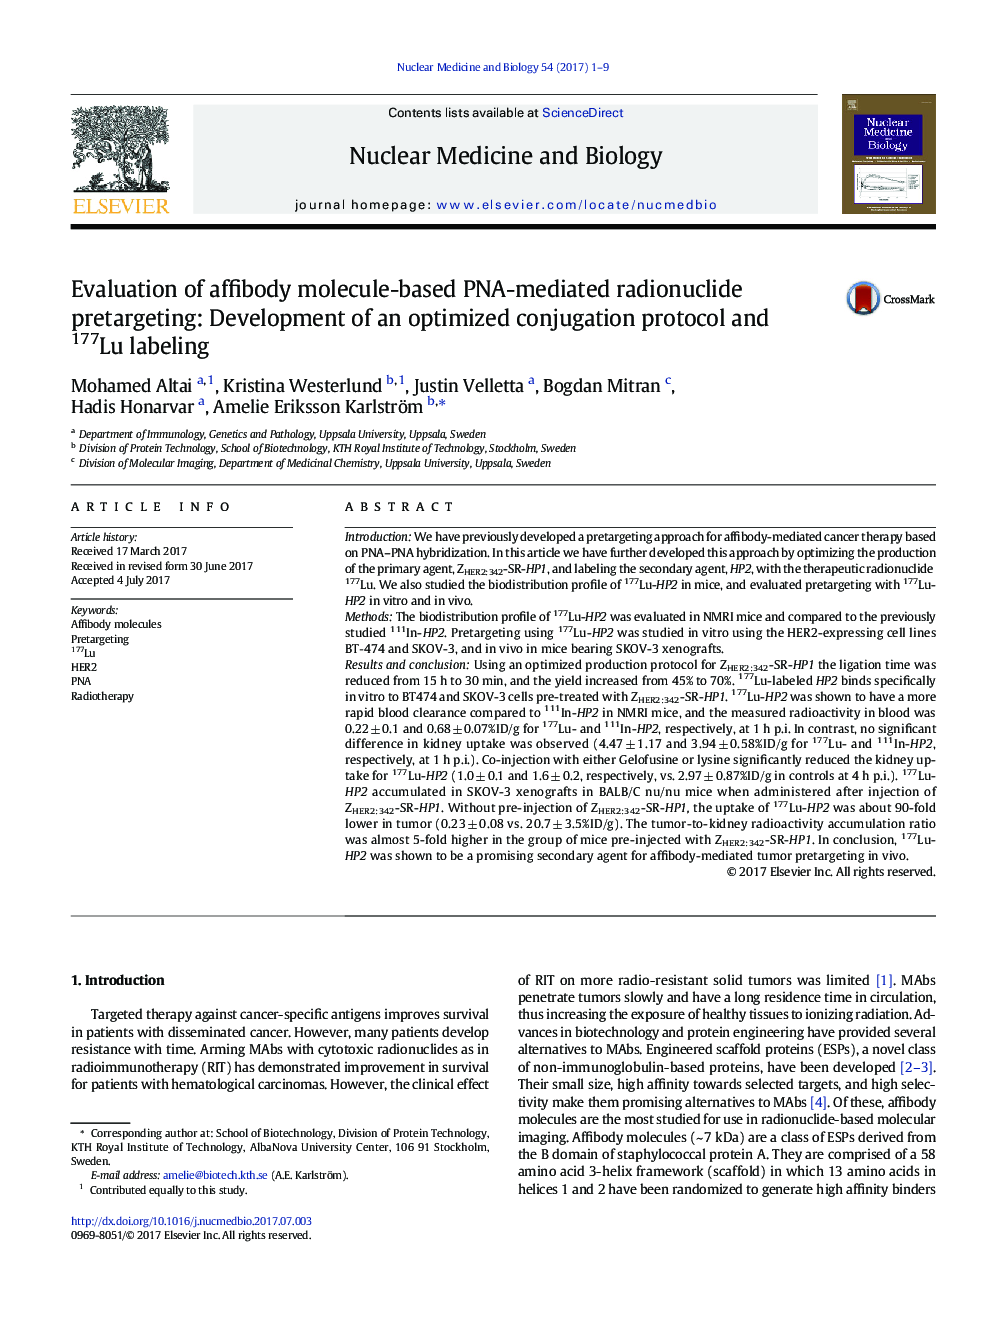 Evaluation of affibody molecule-based PNA-mediated radionuclide pretargeting: Development of an optimized conjugation protocol and 177Lu labeling